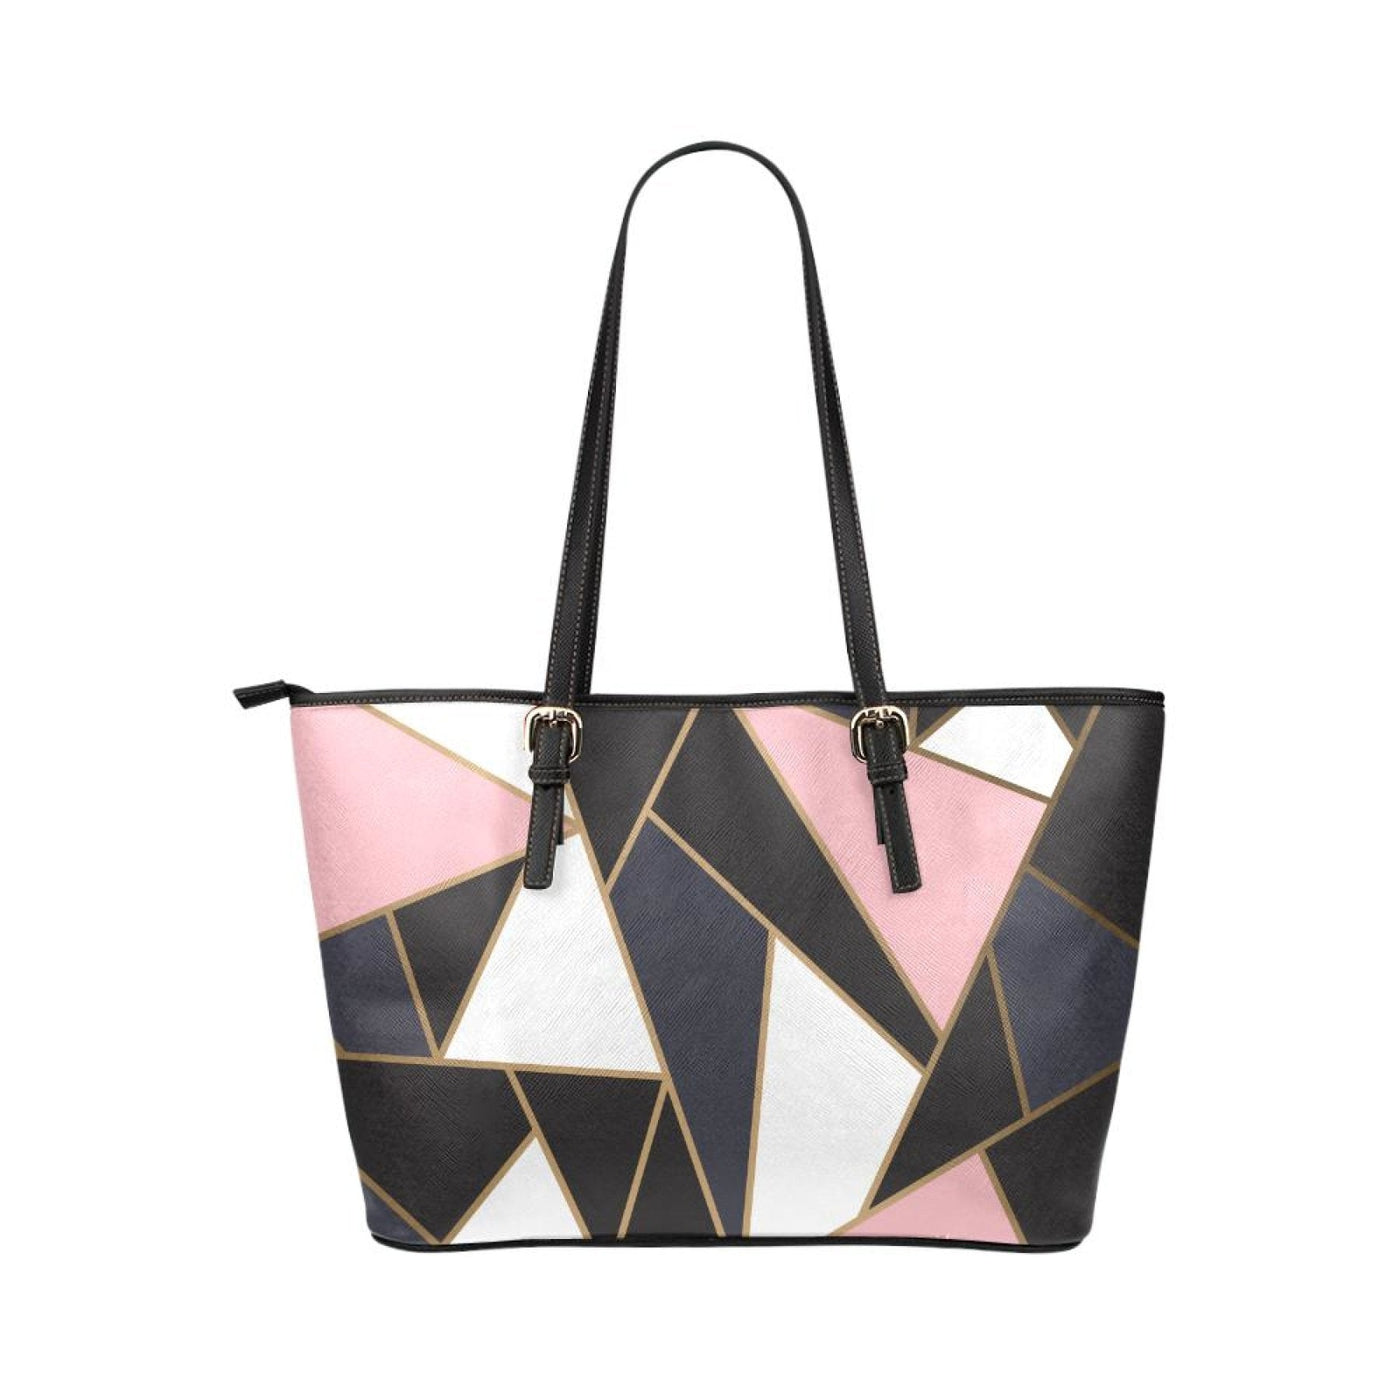 Large Leather Tote Shoulder Bag - Black And Pink Pattern B3554172 - Bags |